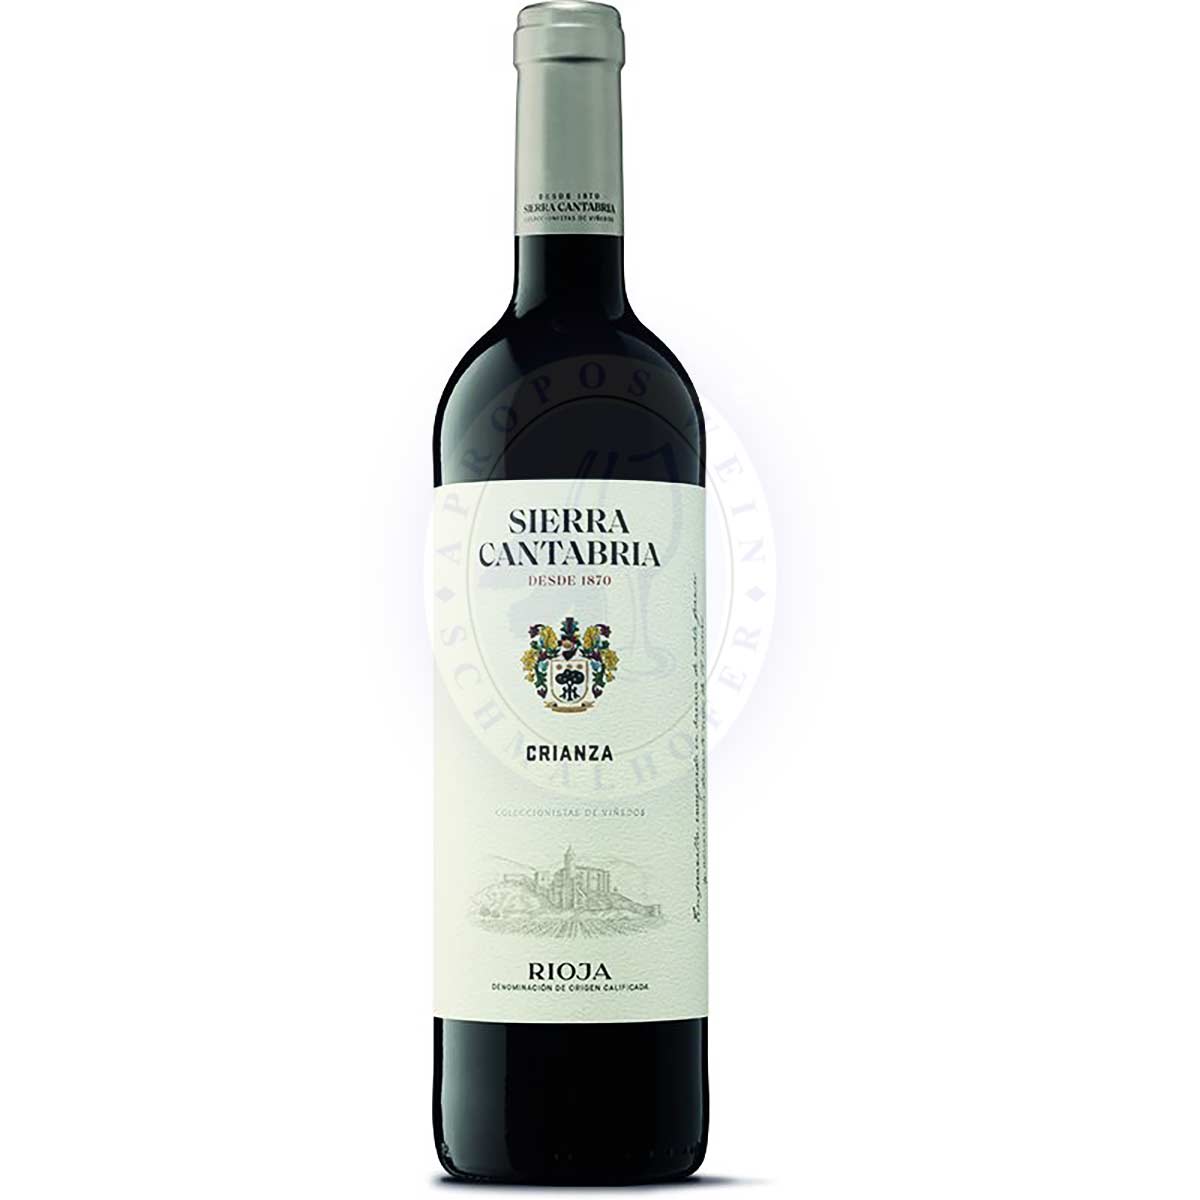 Crianza Rioja Doca 2019 Cantabria 0,75l